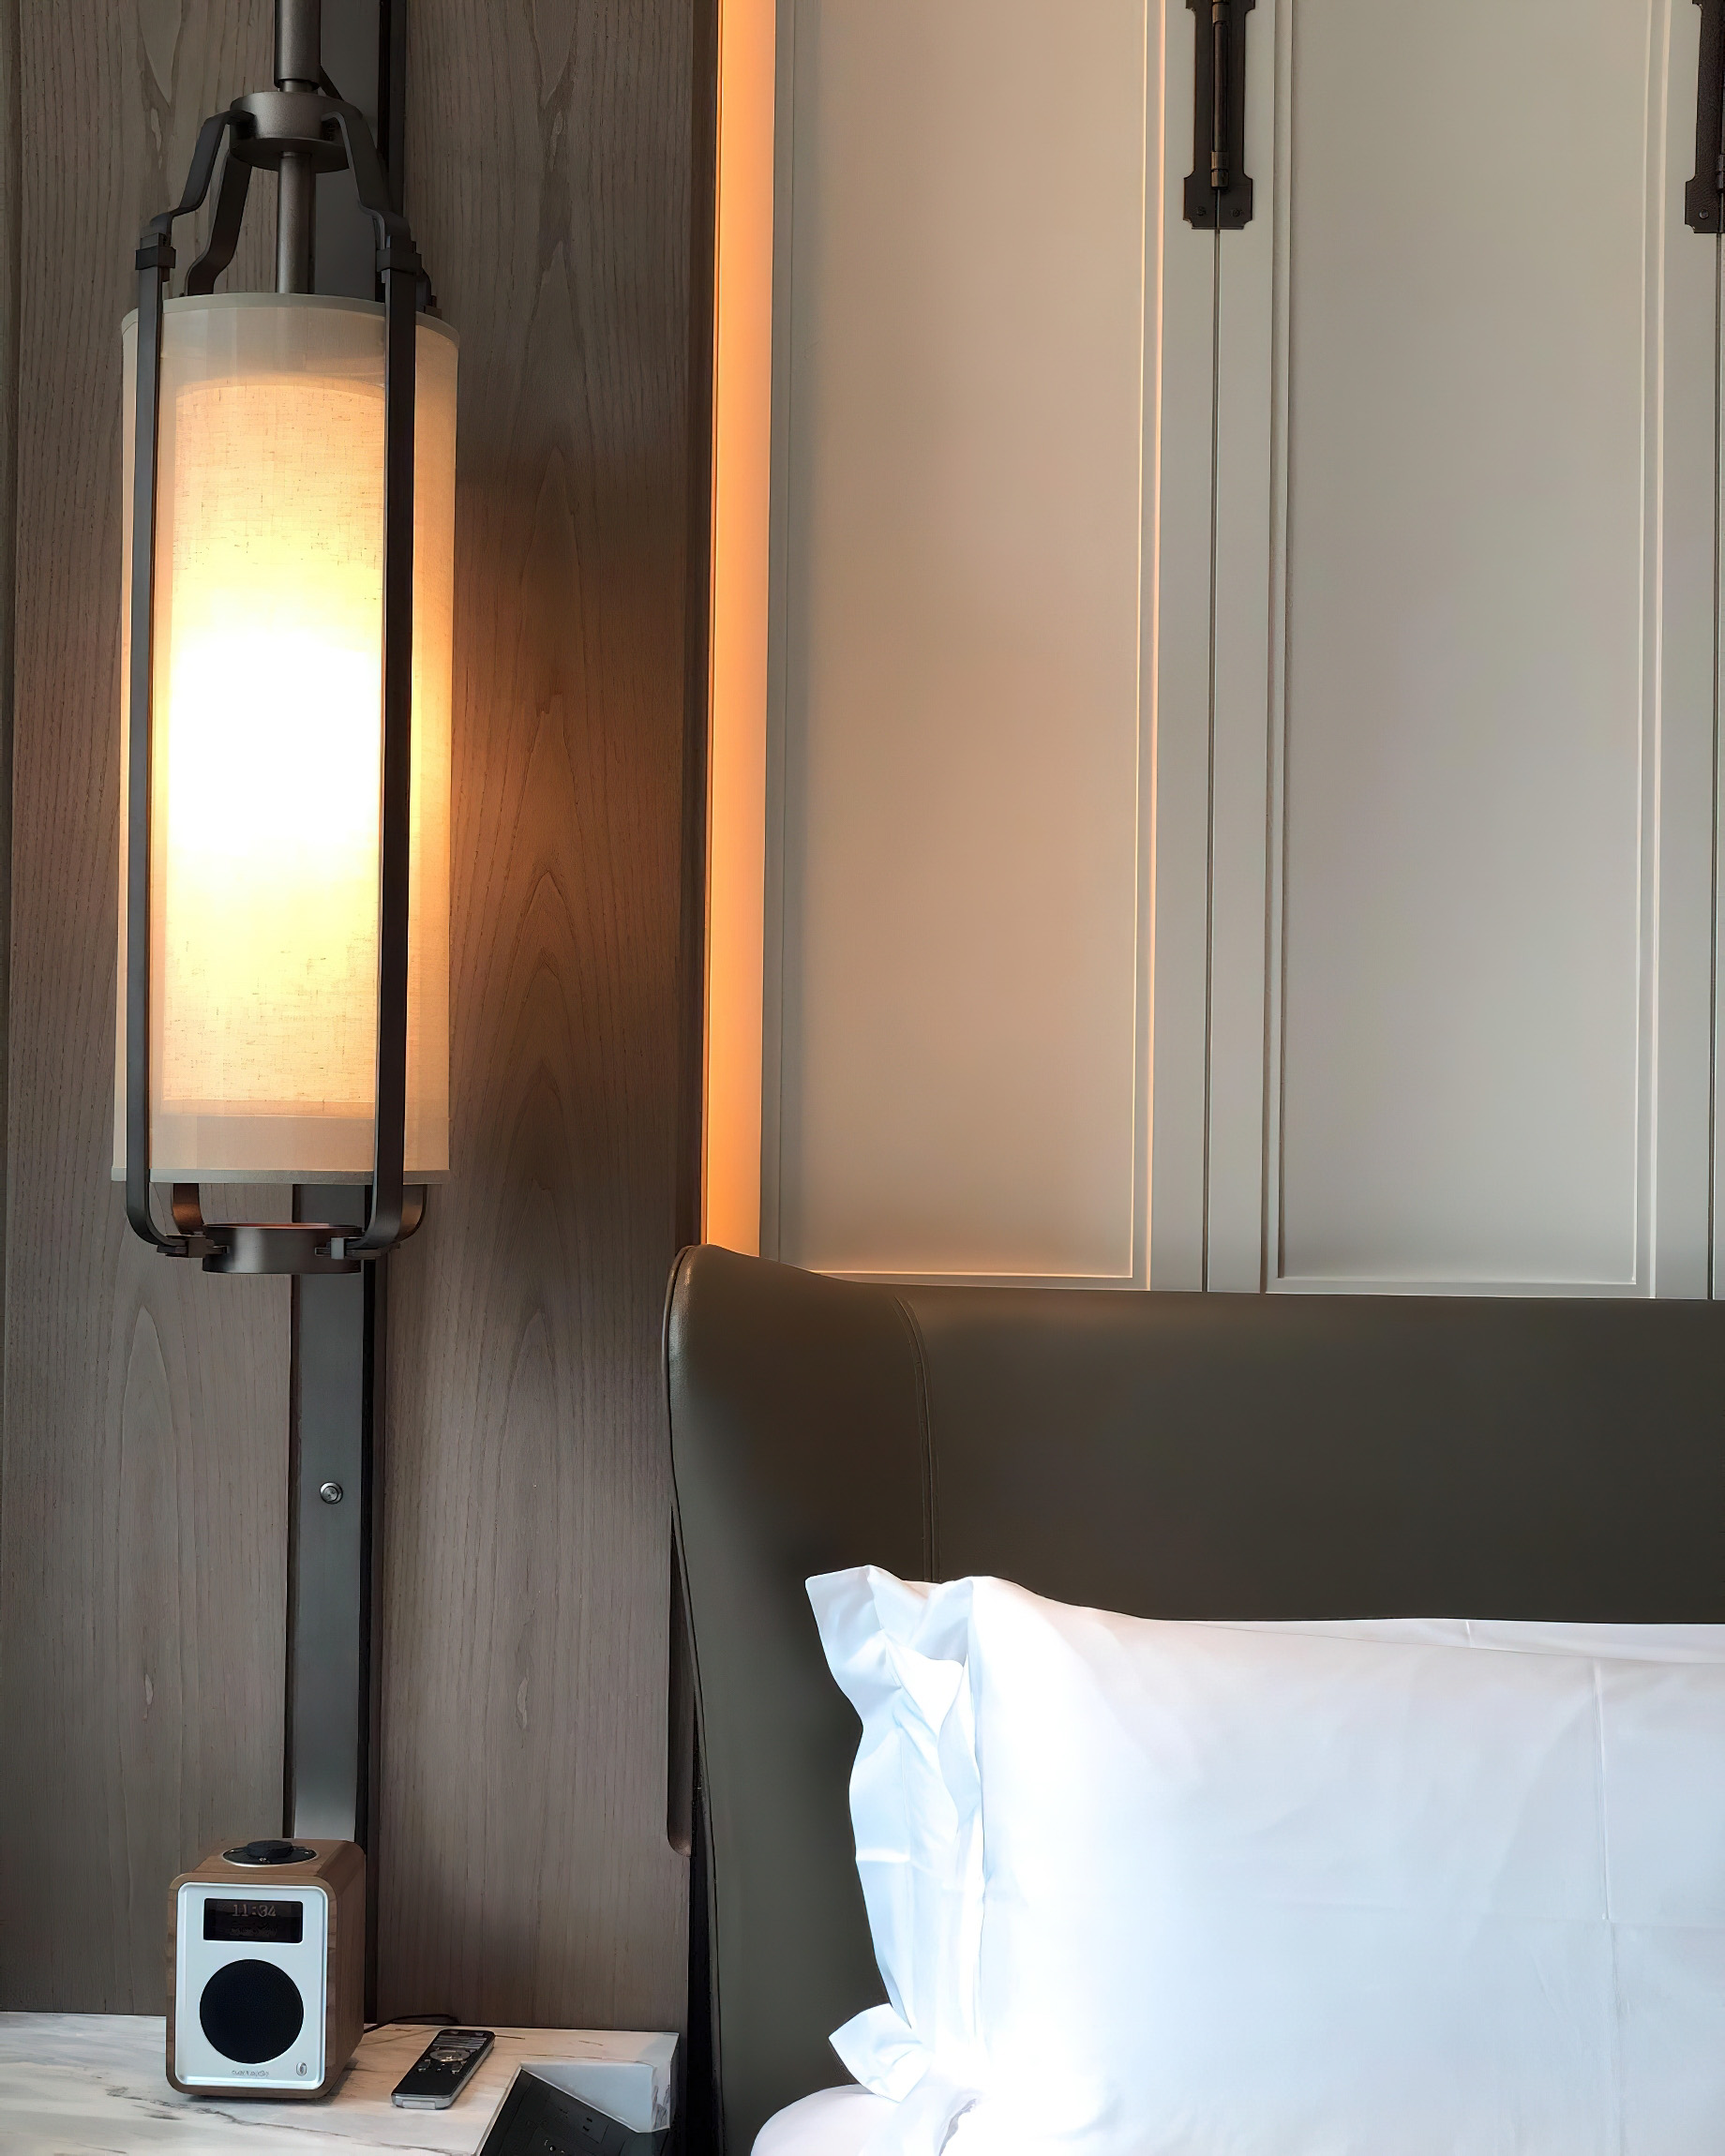 The St. Regis Hong Kong Hotel – Wan Chai, Hong Kong – Bedroom Design Elements